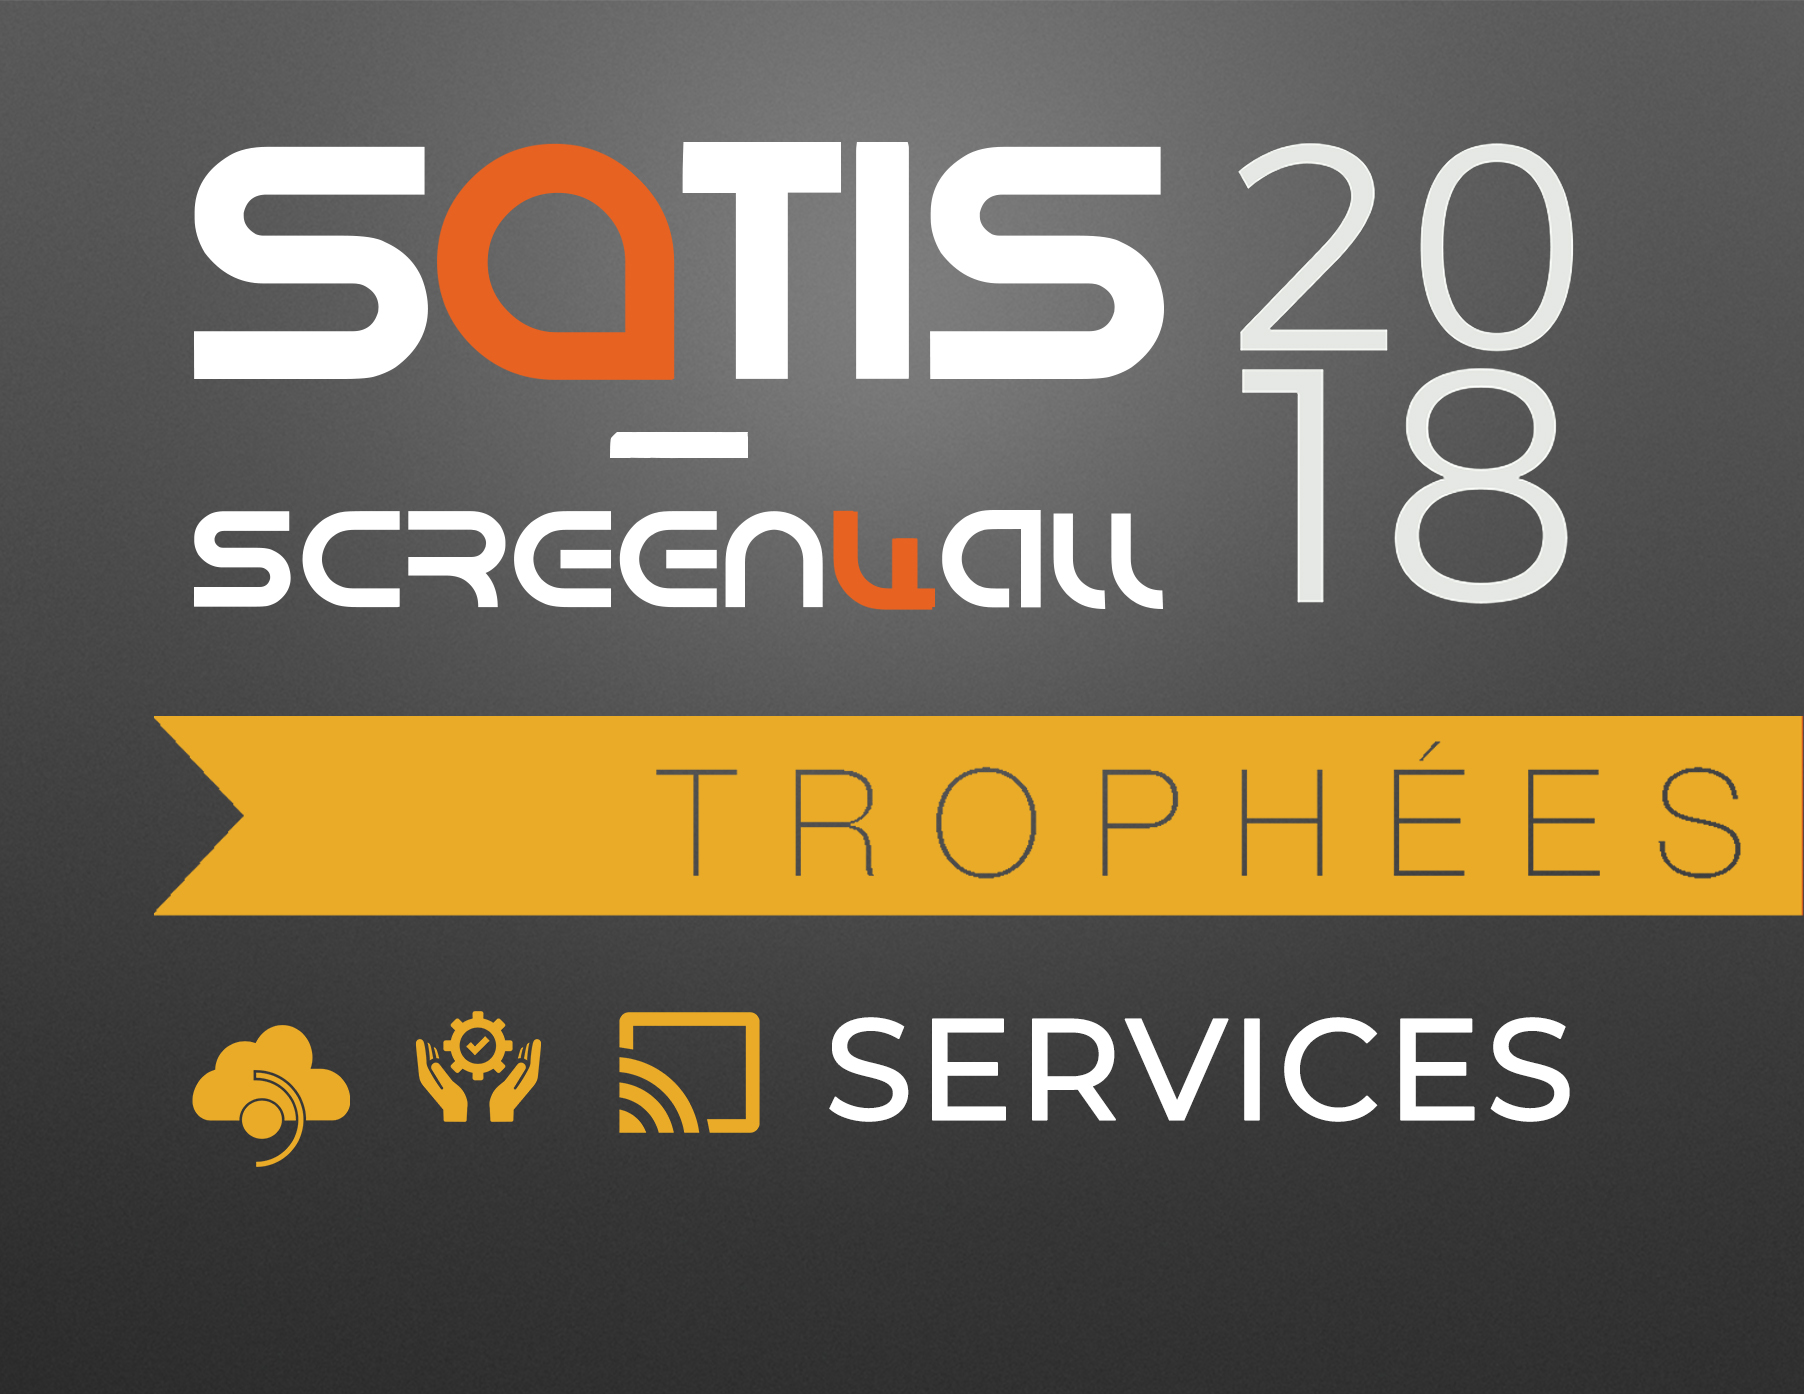 SATIS-S4A-Trophes-2018---SERVICE.jpg